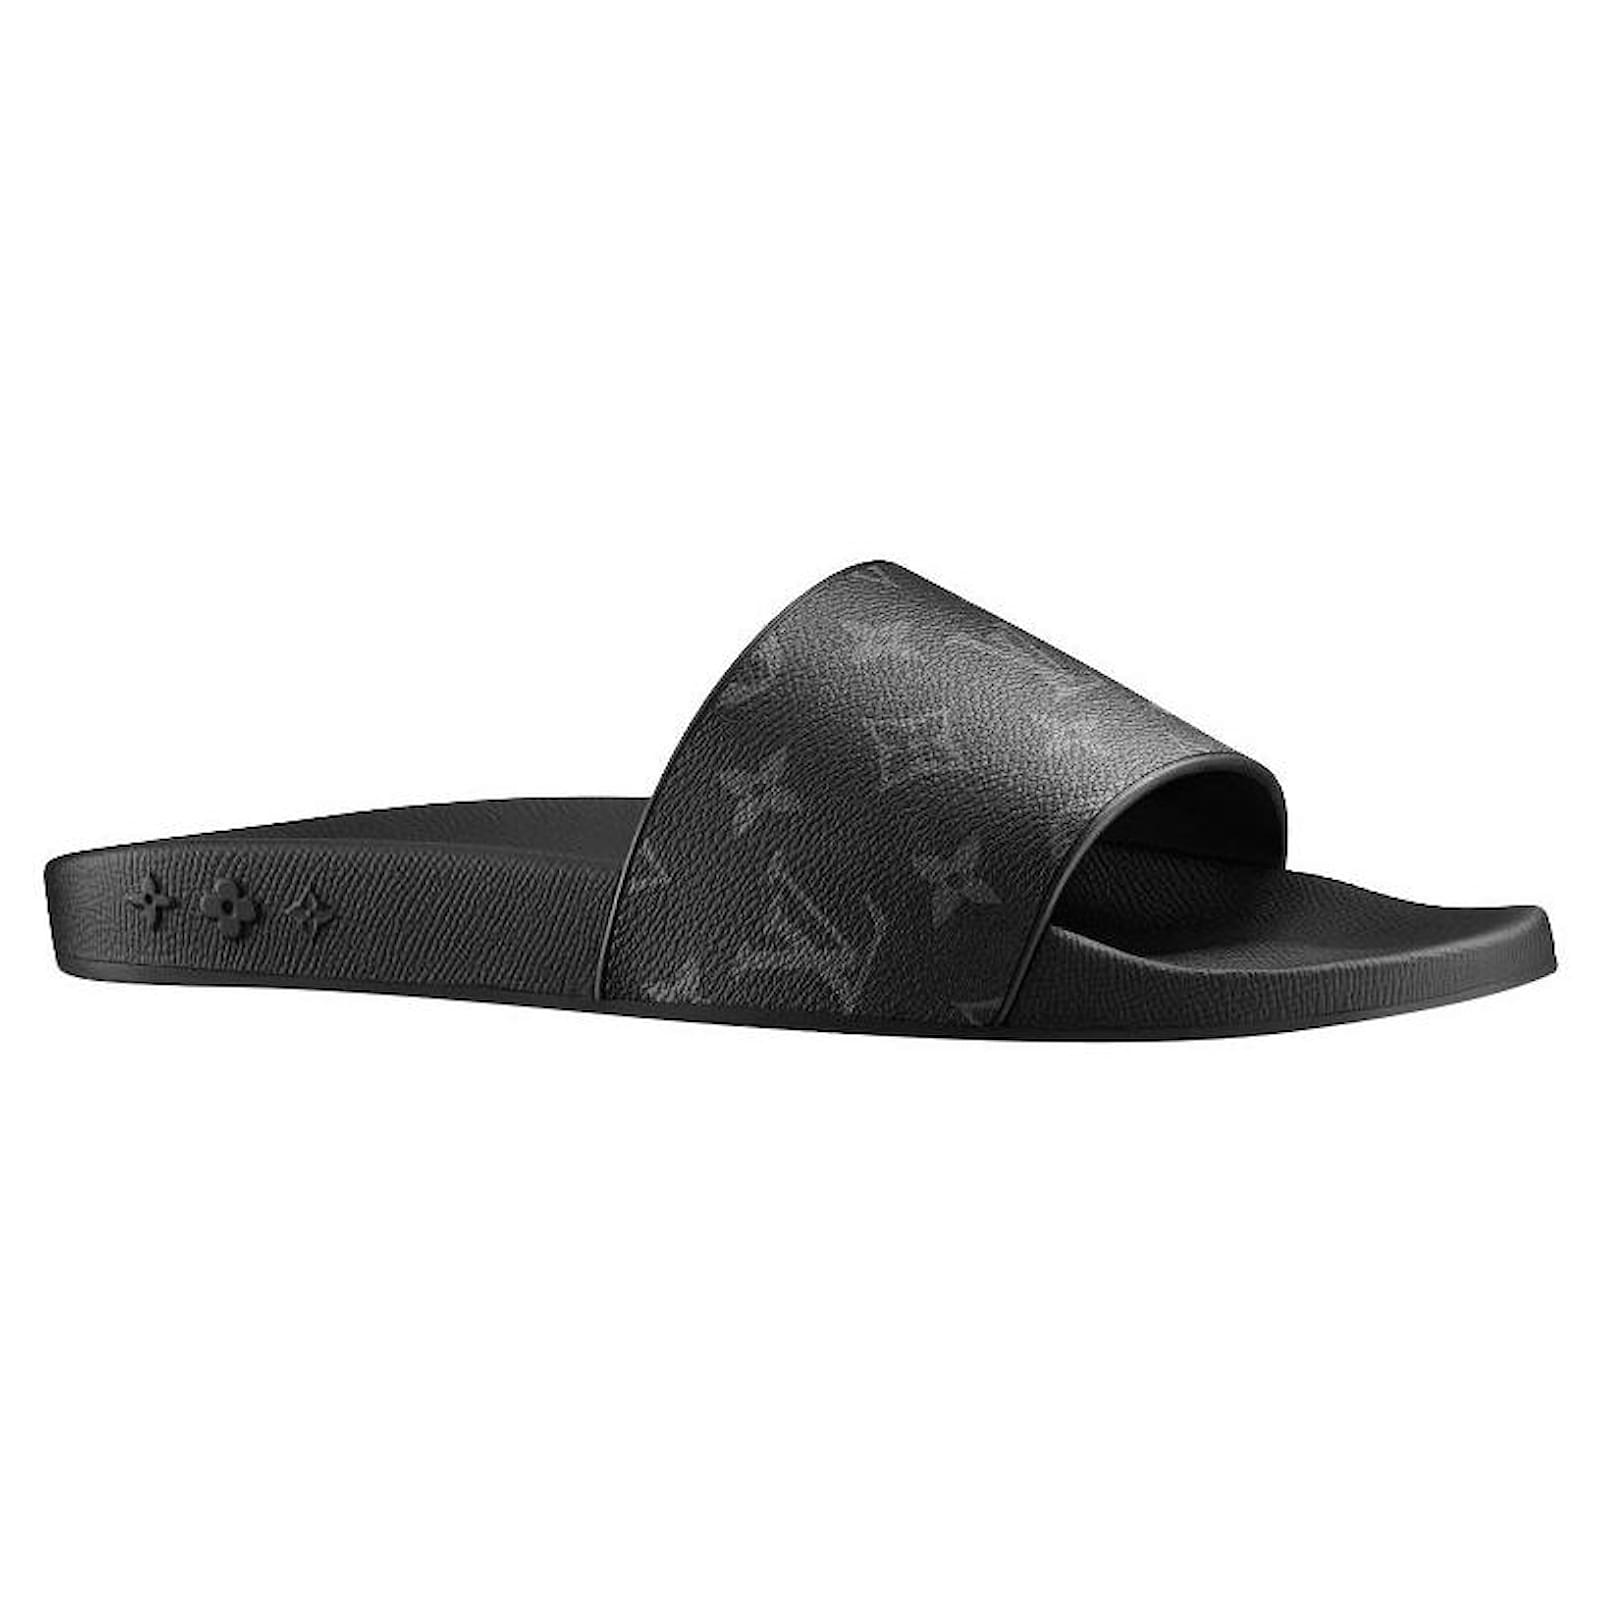 Louis Vuitton, Shoes, Waterfront Mule Blackwhite